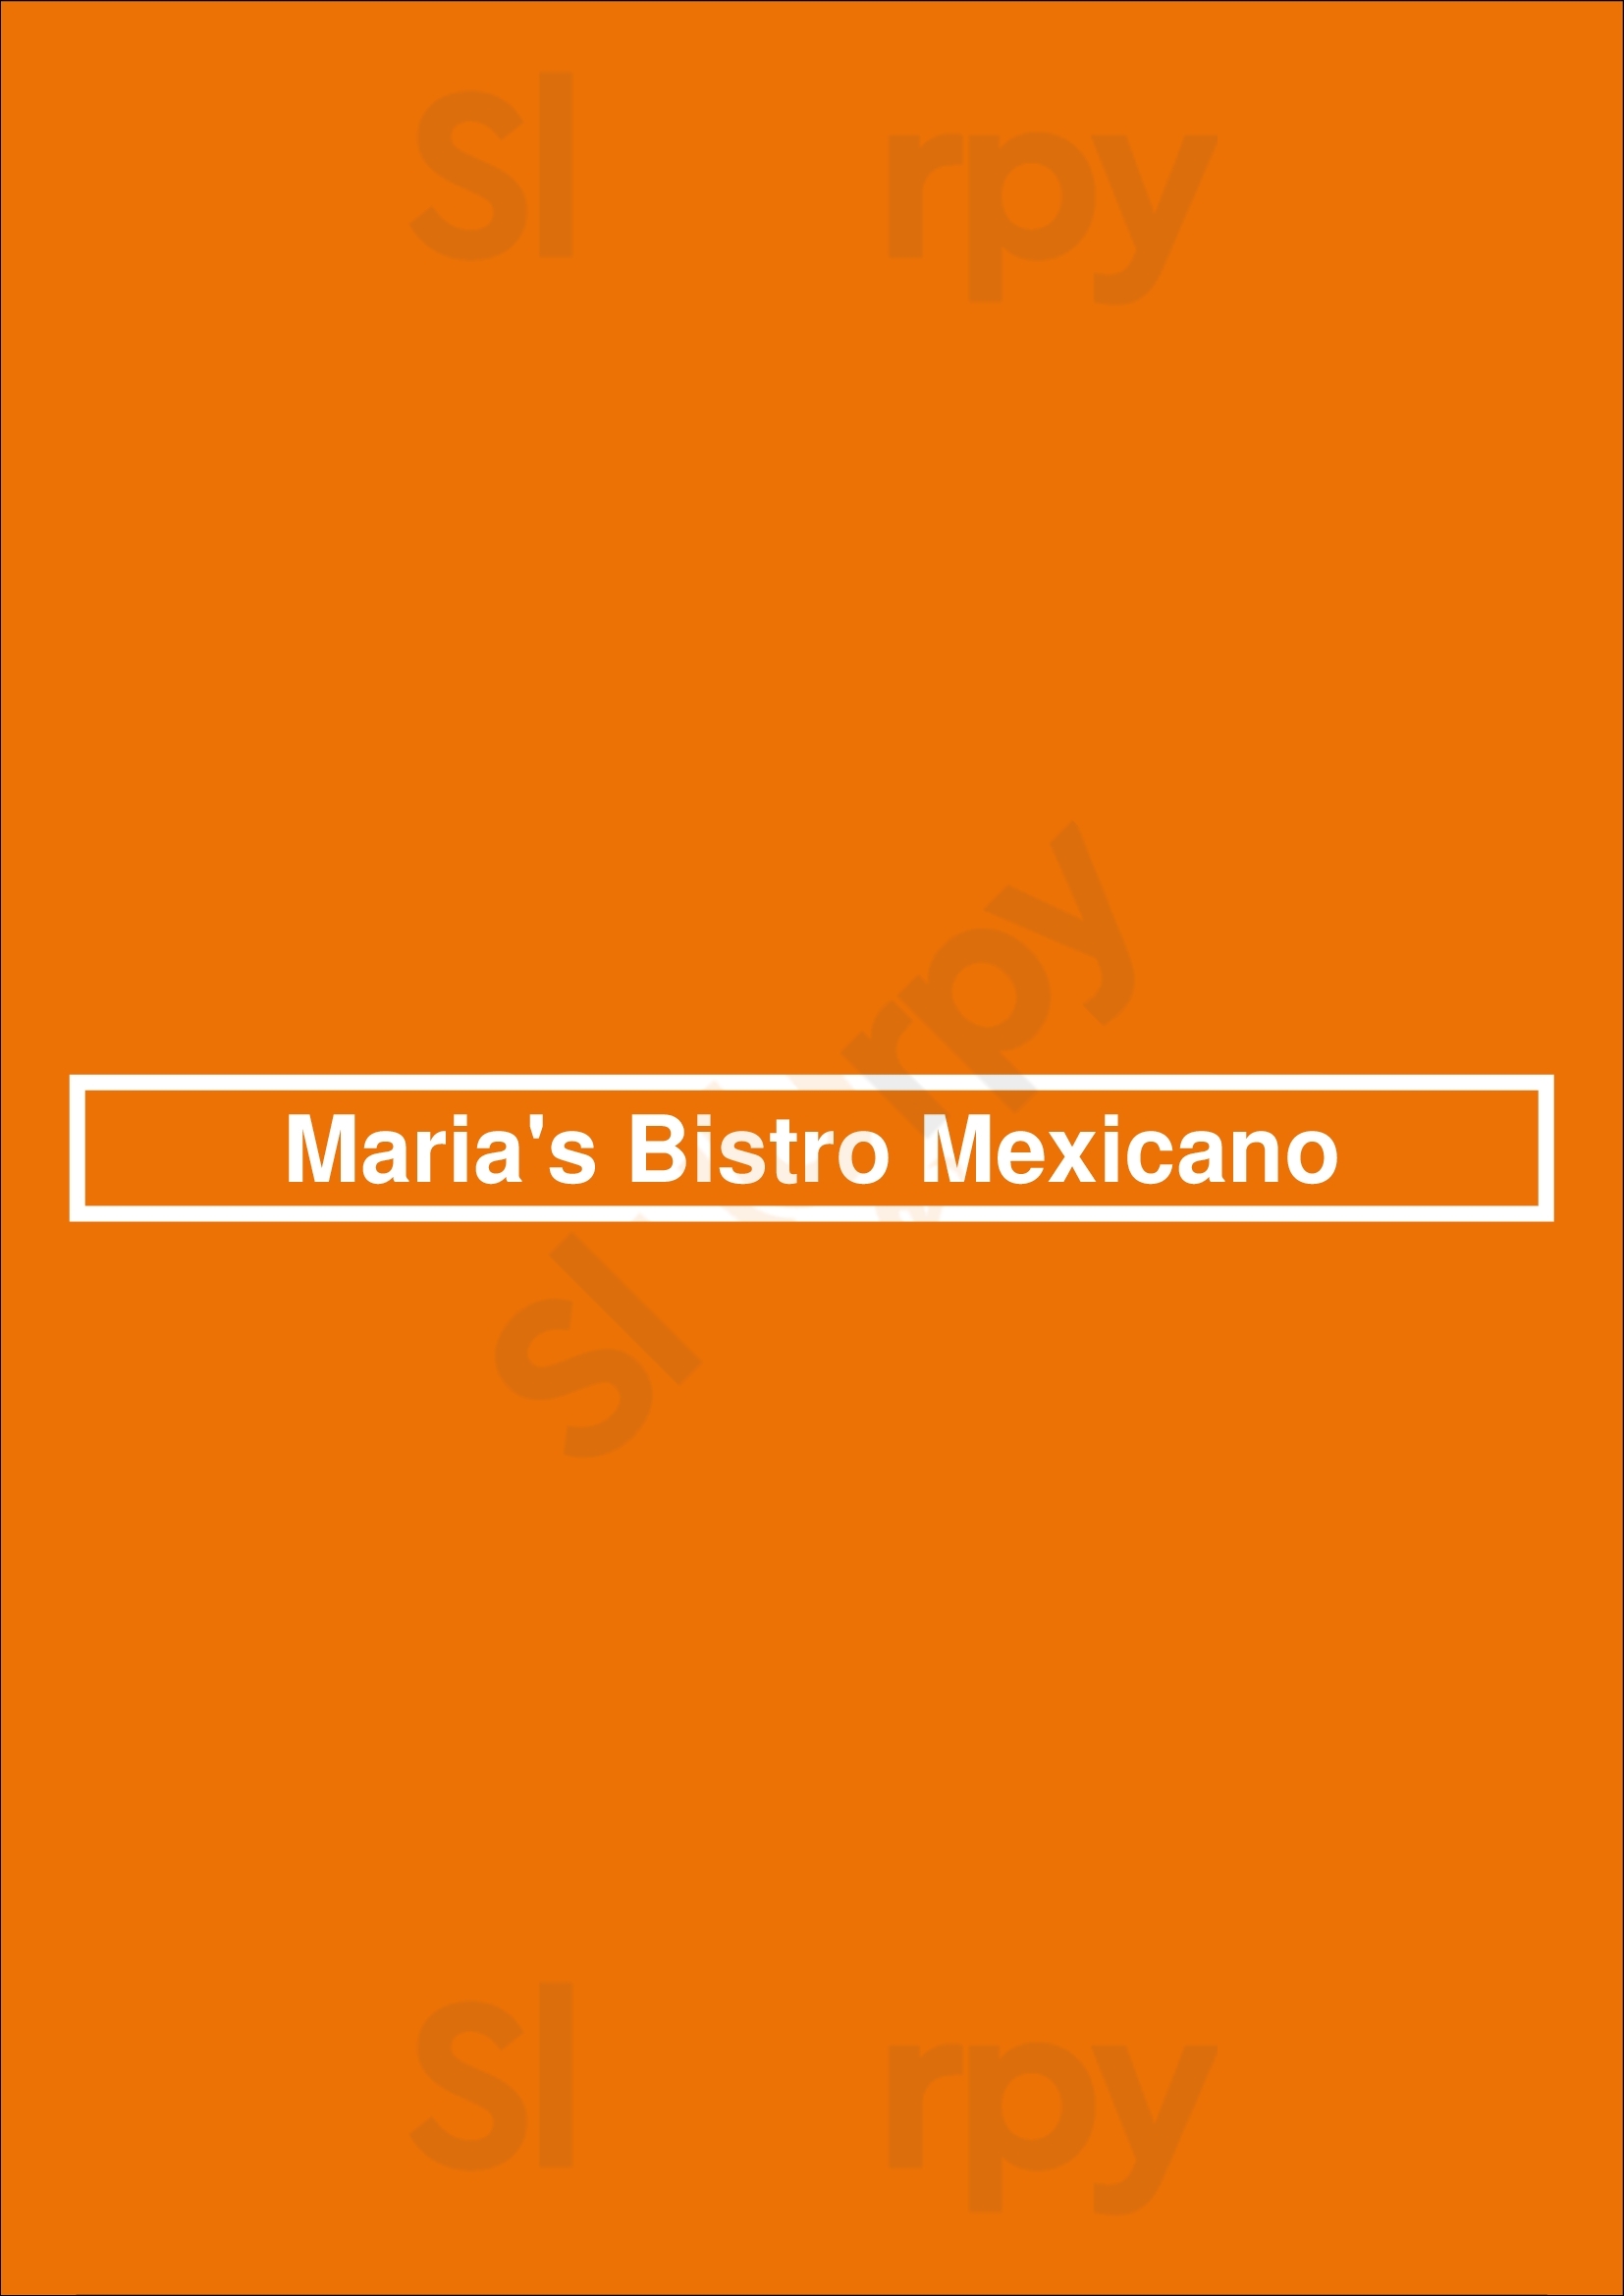 Maria's Bistro Mexicano Brooklyn Menu - 1